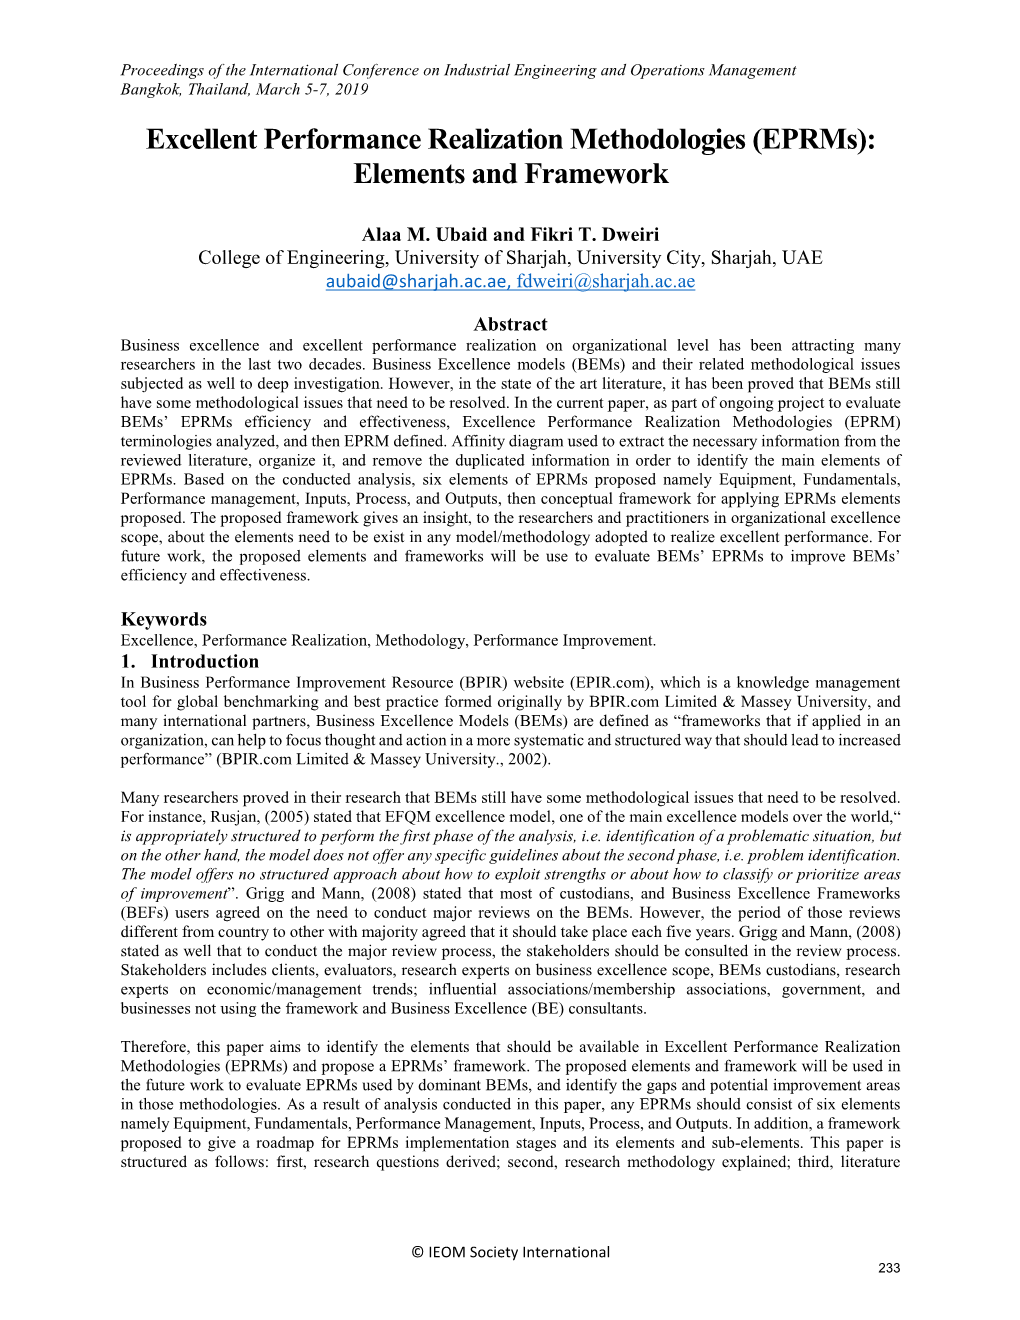 Elements and Framework